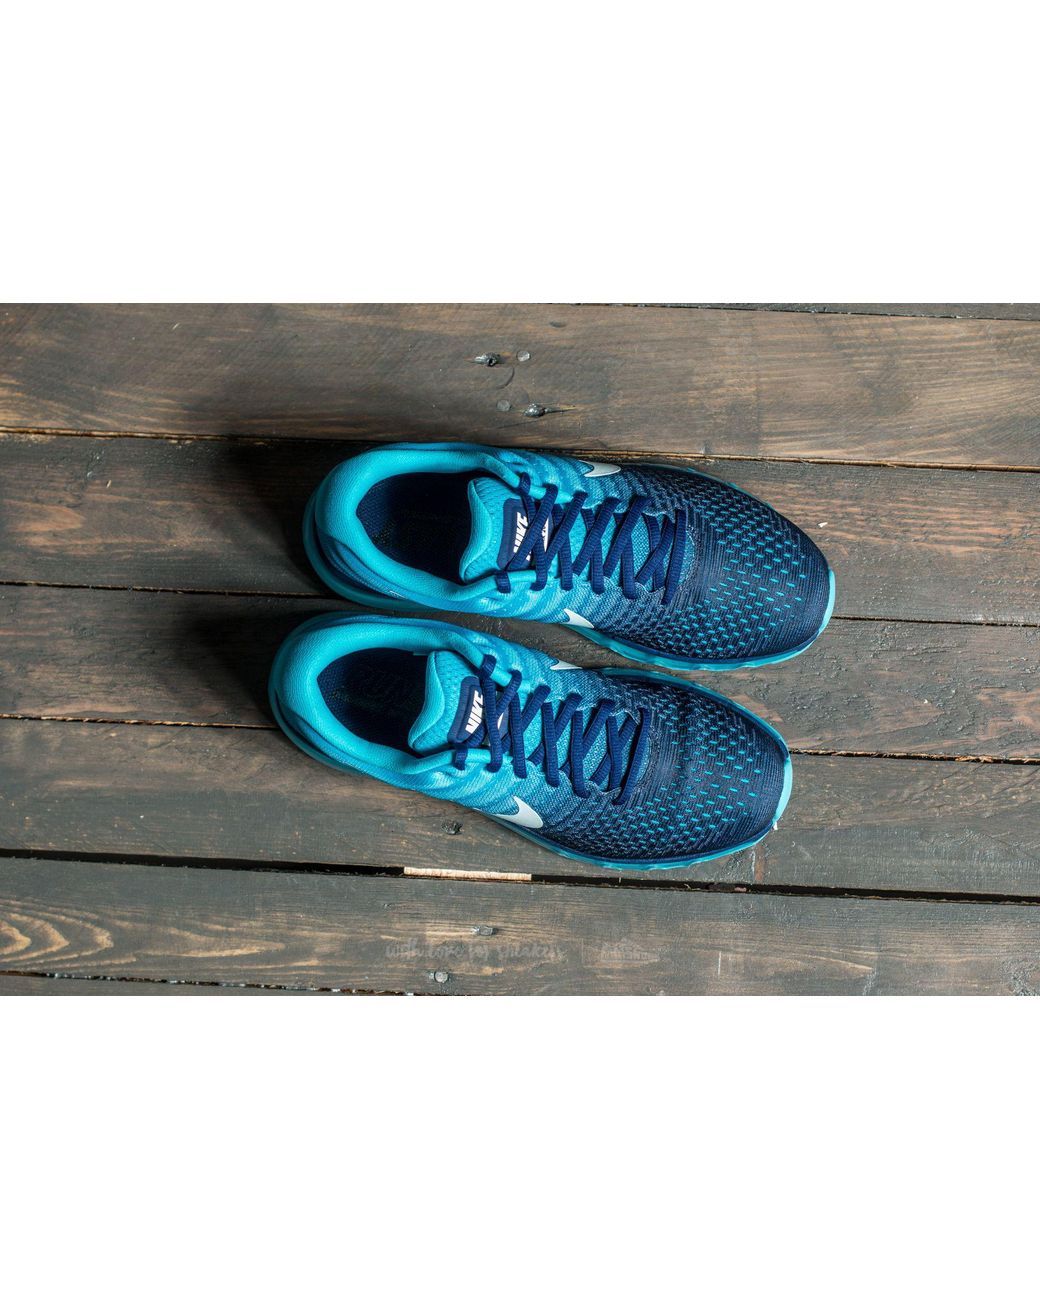 Nike Air Max 2017 Binary Blue/ Glacier Blue for Men